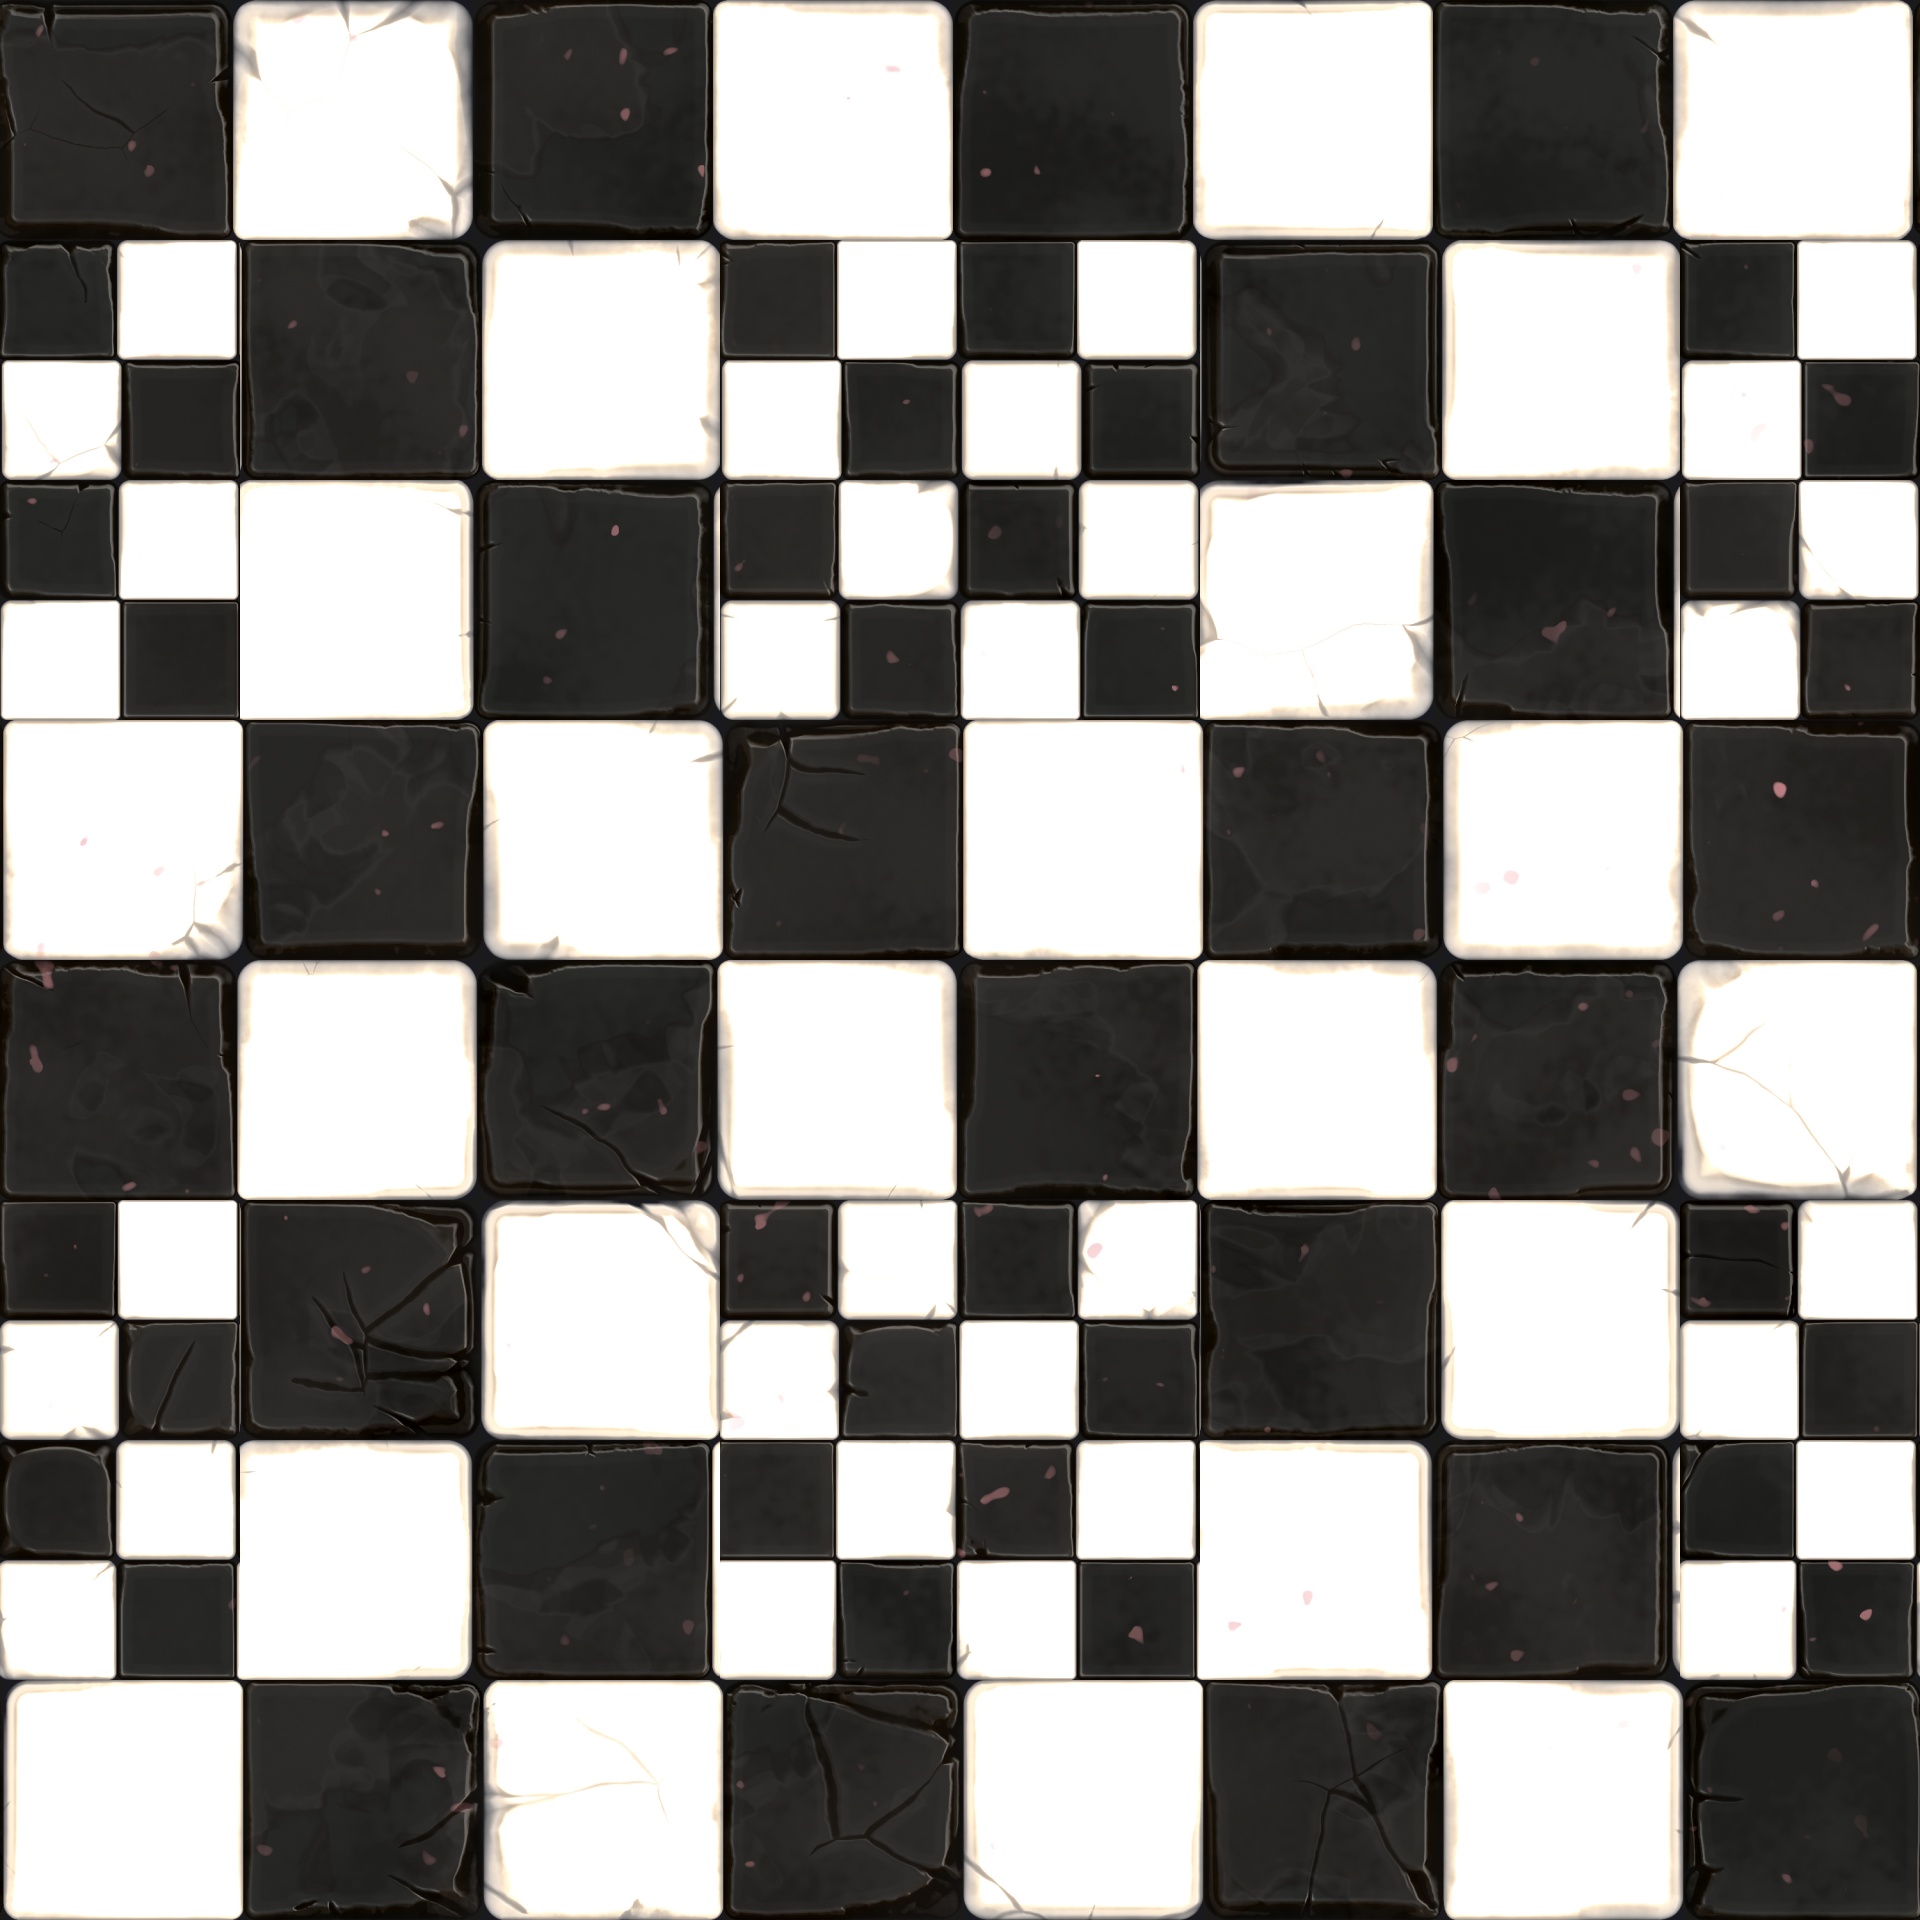 Шахматные квадратики. Checker шашечки. Шахматная доска. Шахматная доска бело черная. Клетки шахматной доски.